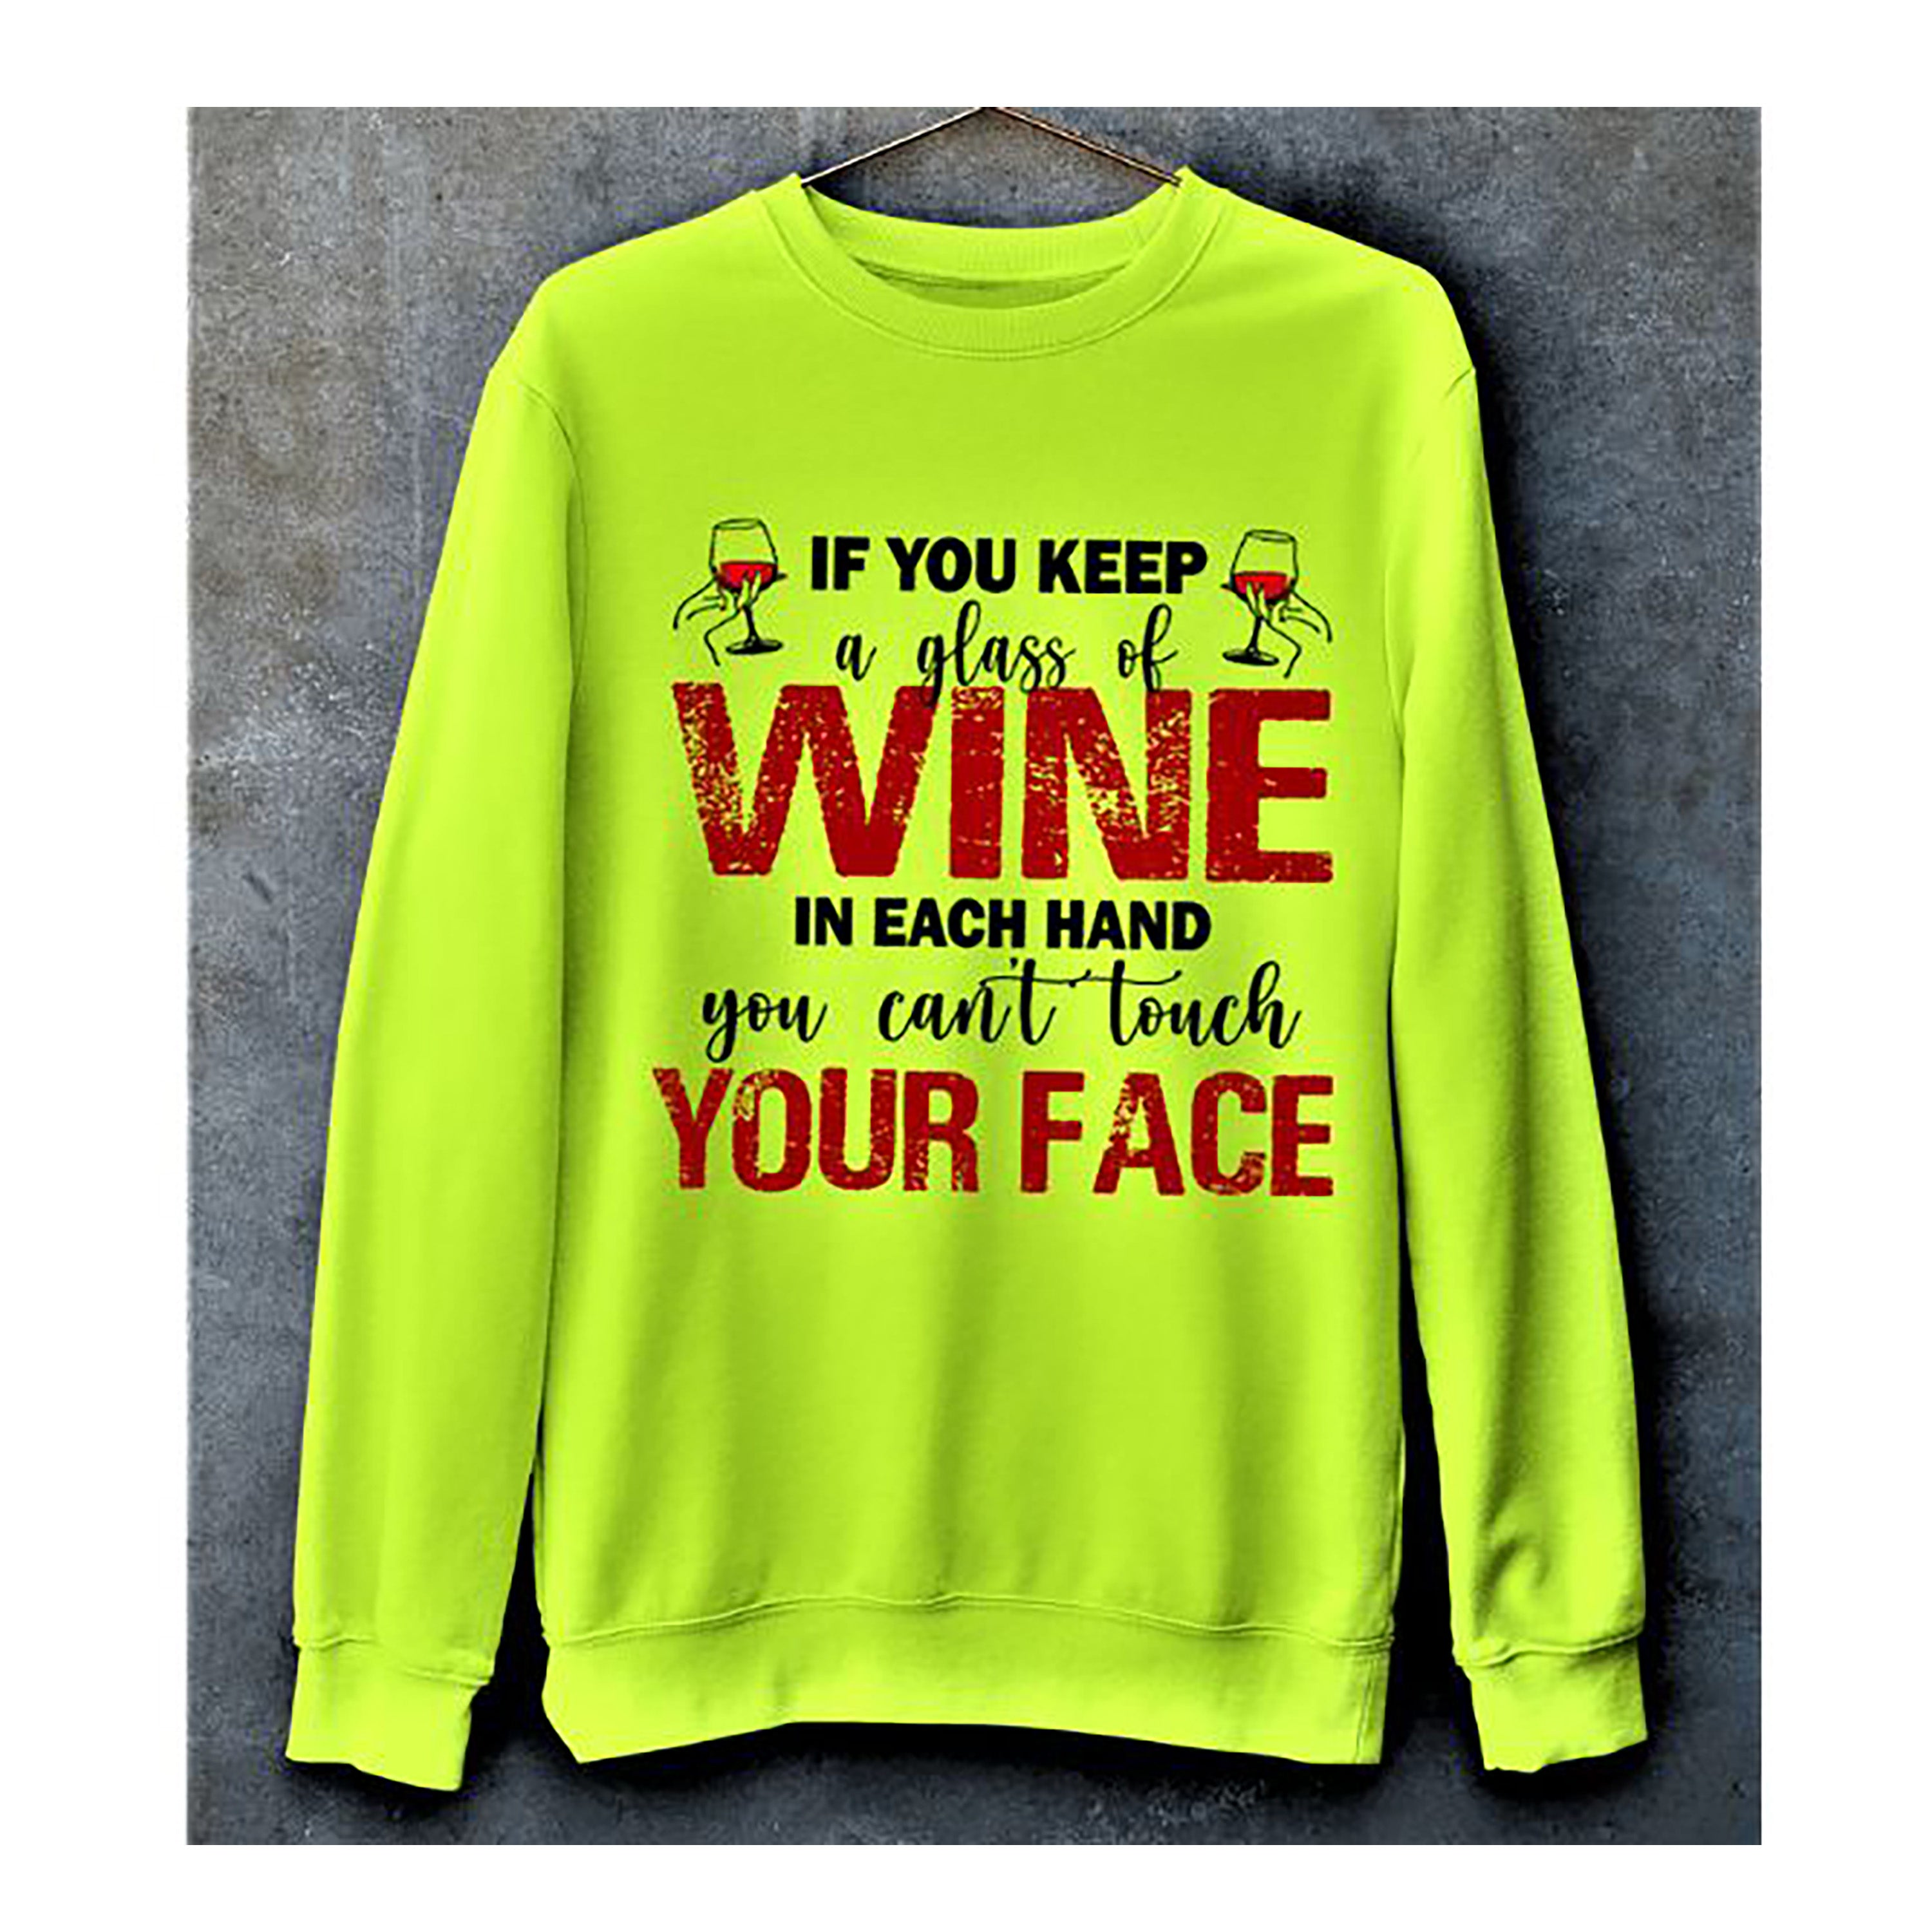 "IF YOU KEEP A GLASS OF WINE"- Hoodie & Sweatshirt.